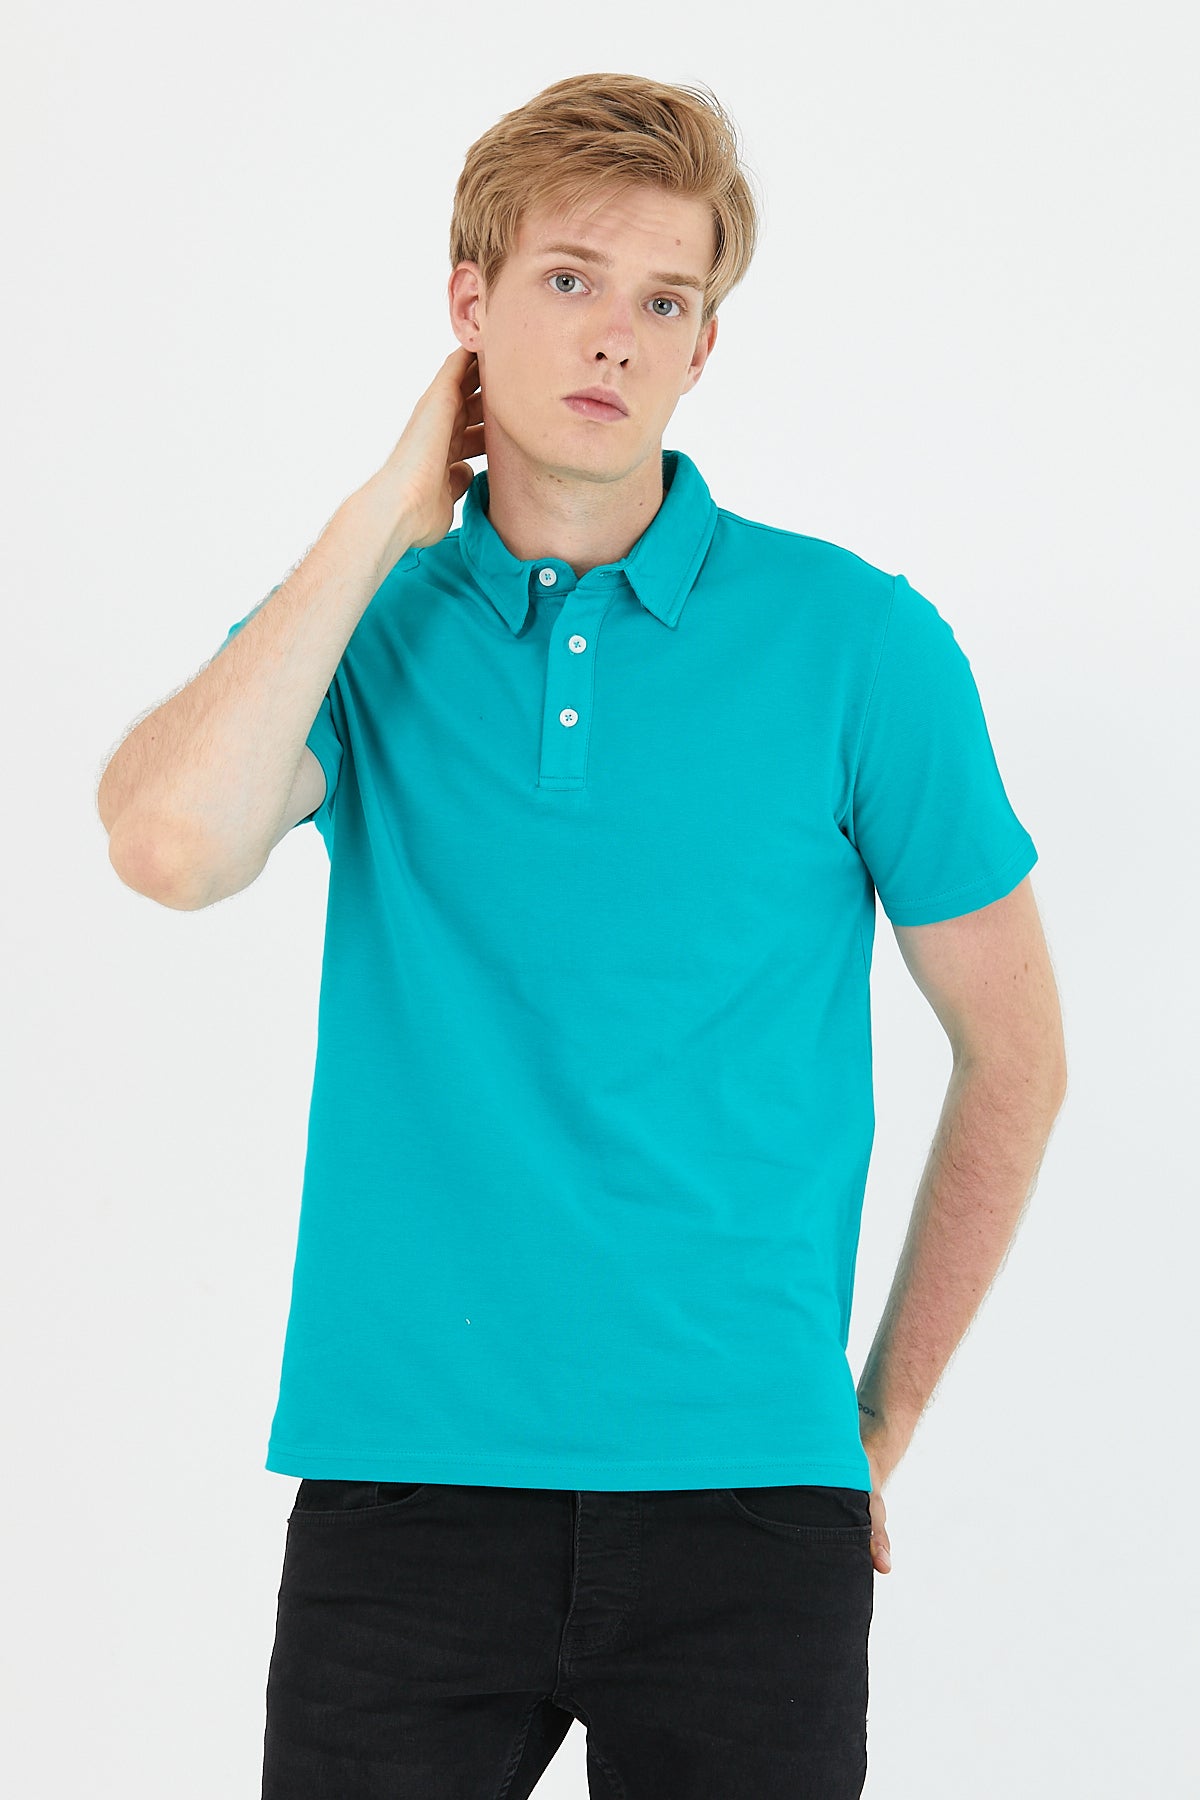 Men's Polo Shirt - 3 Button Performance Polo, 100% Cotton Men's Polo Shirt - Wear Sierra